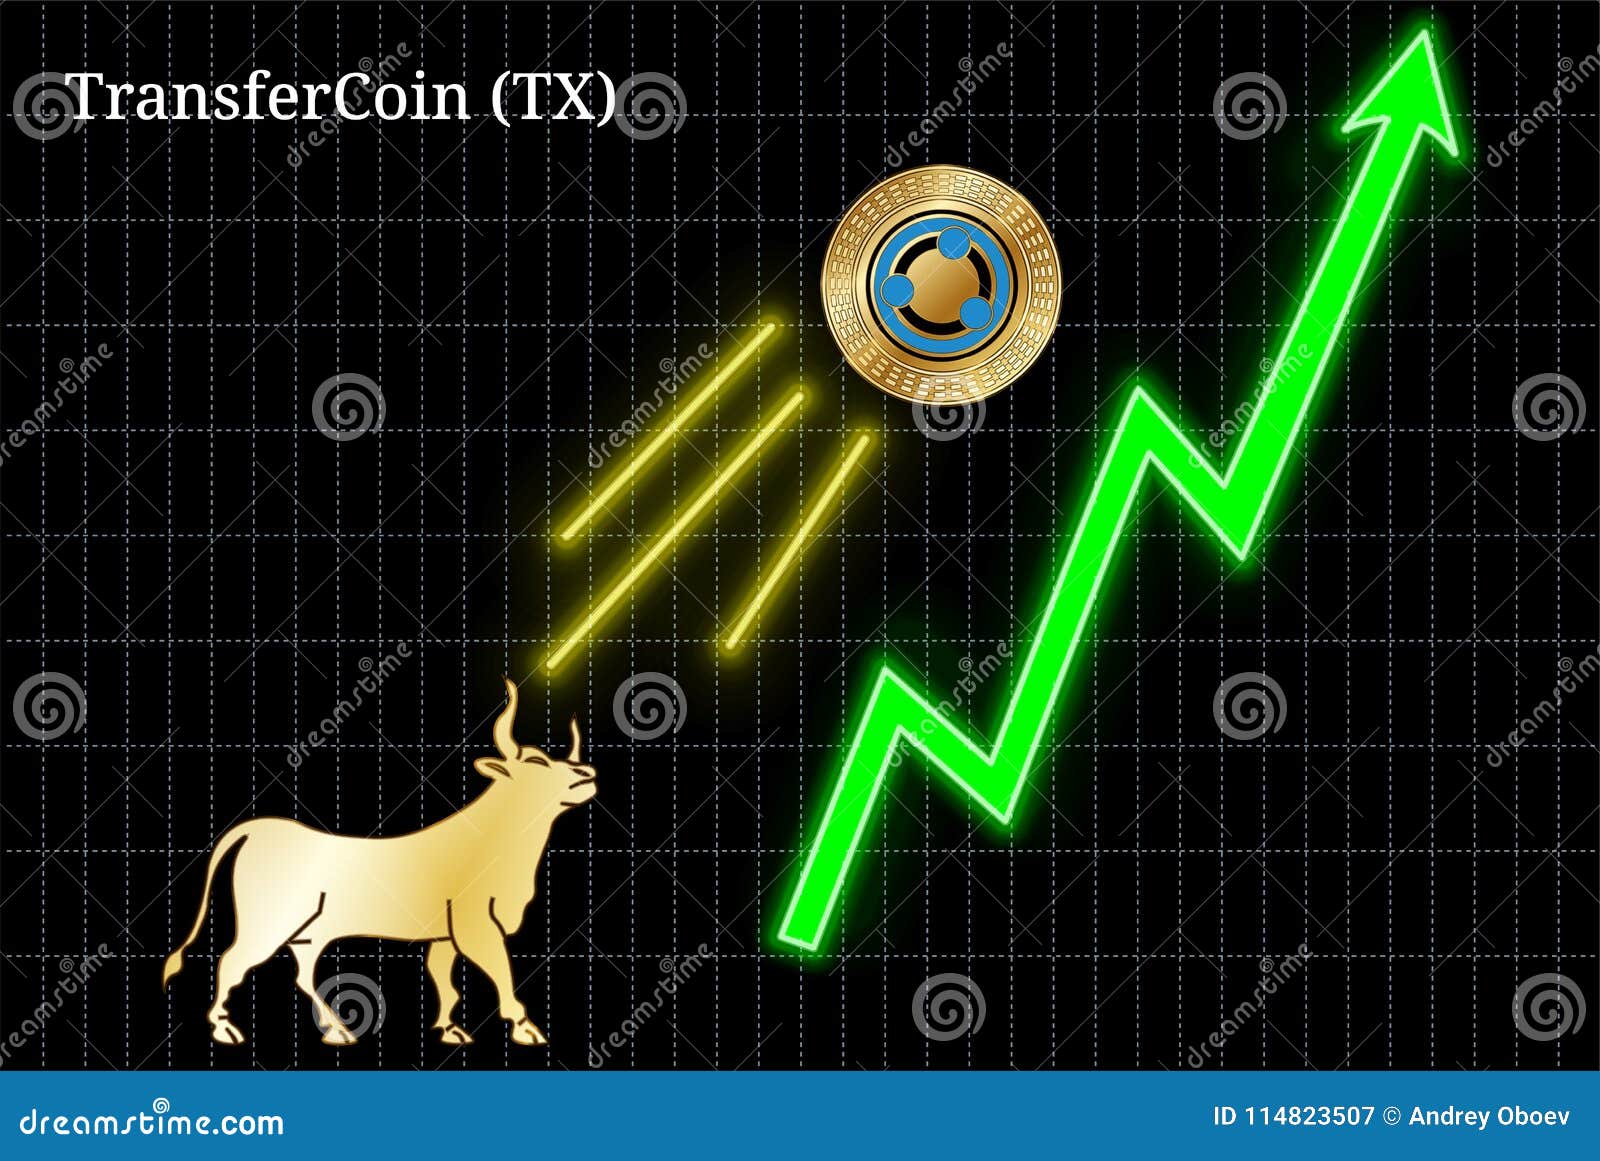 Bullish TransferCoin TX Cryptocurrency Chart Stock Vector ...